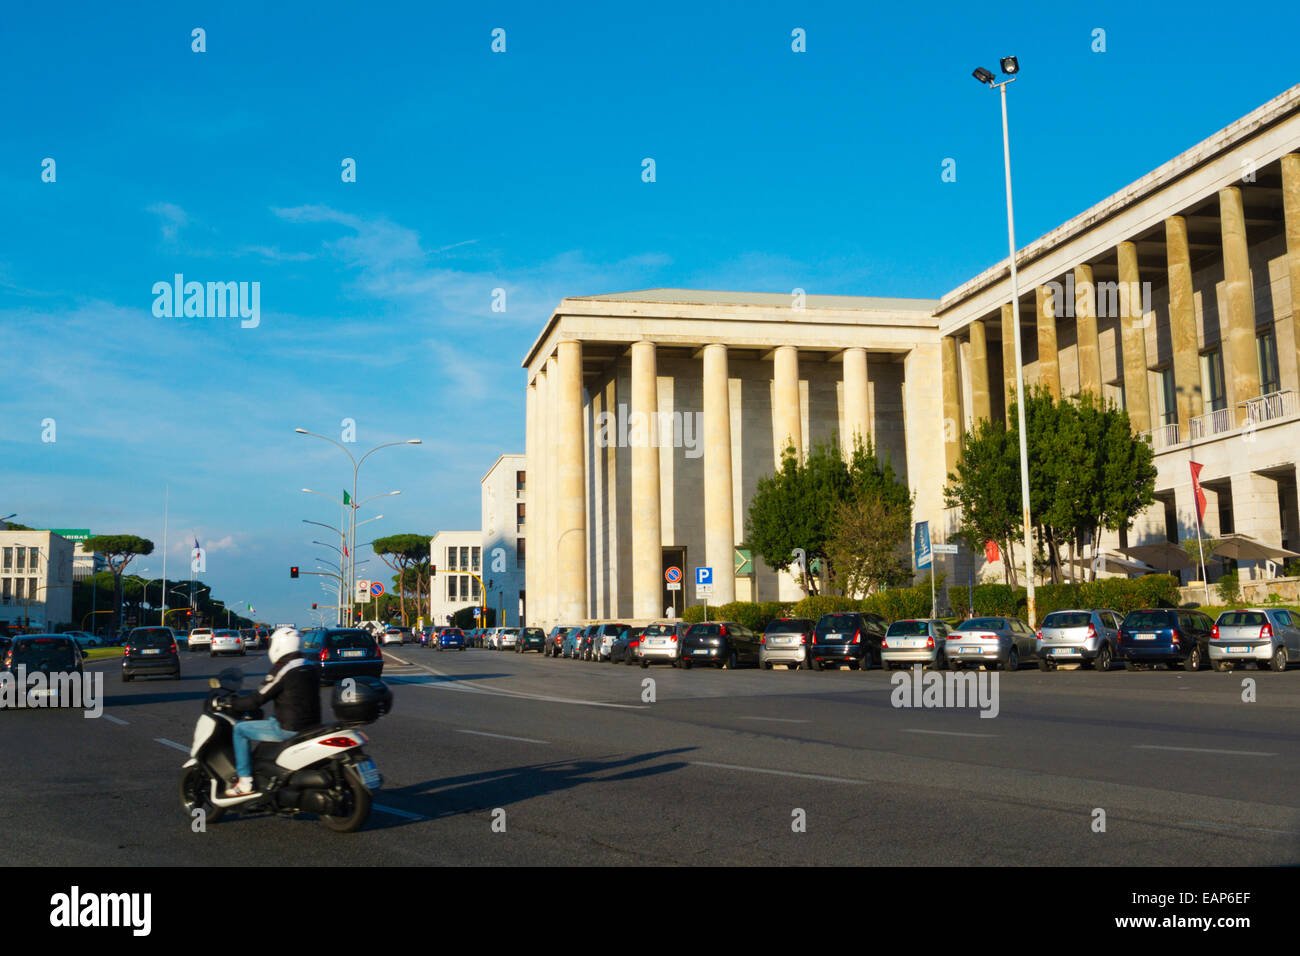 Piazza Guglielmo Marconi, gobierno y distrito financiero EUR, Roma, Italia Foto de stock